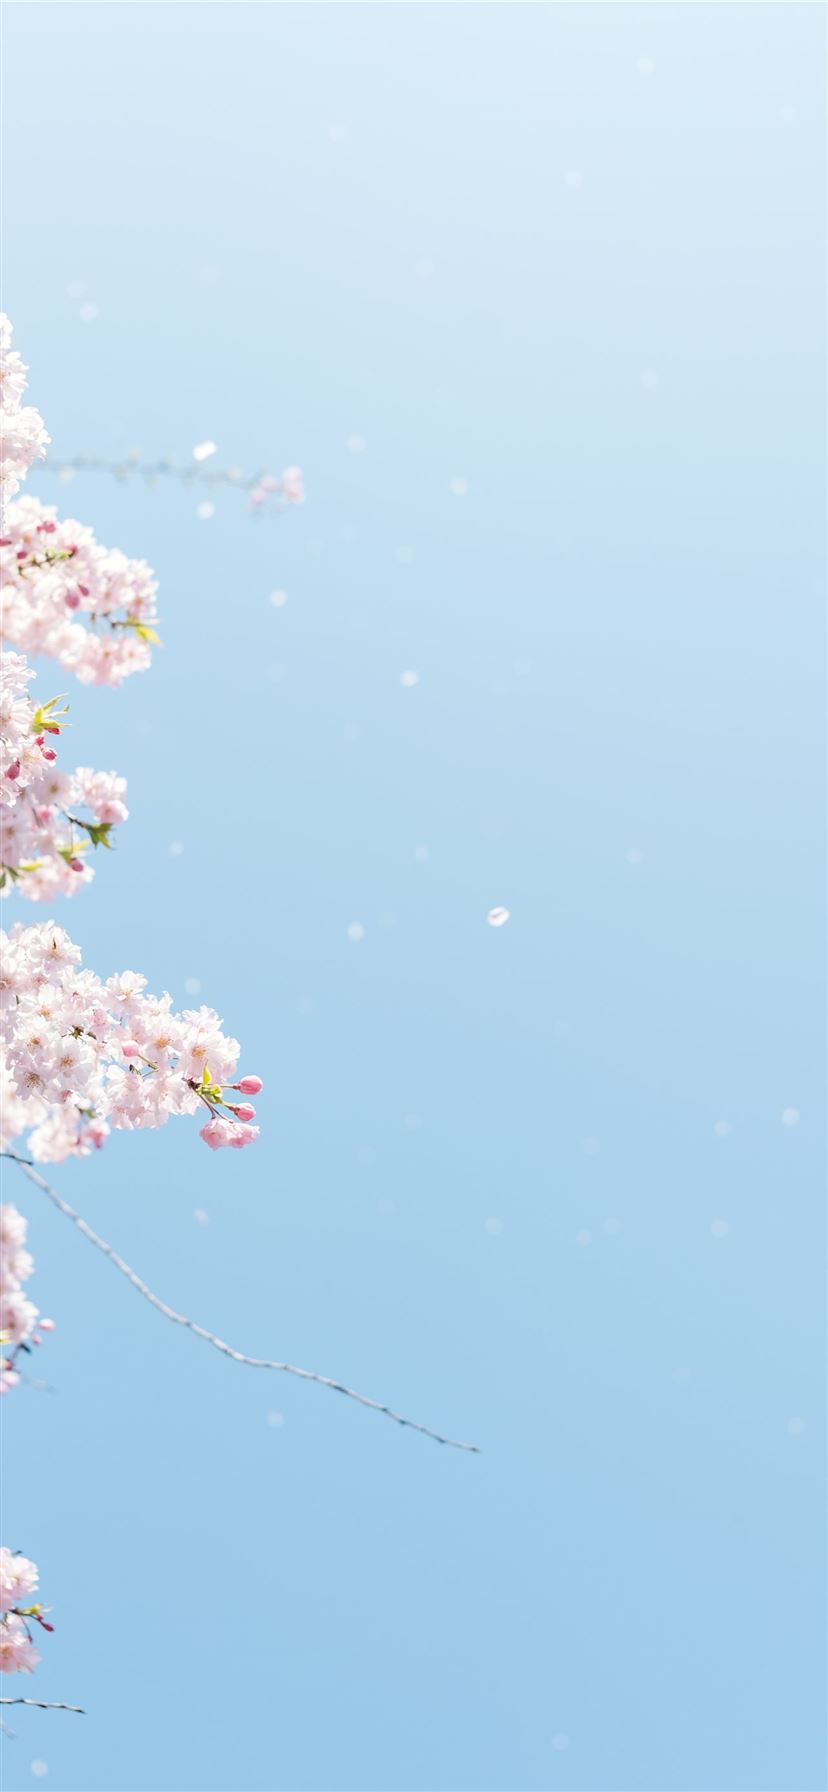 cherry blossom under blue sky iPhone 11 wallpaper 